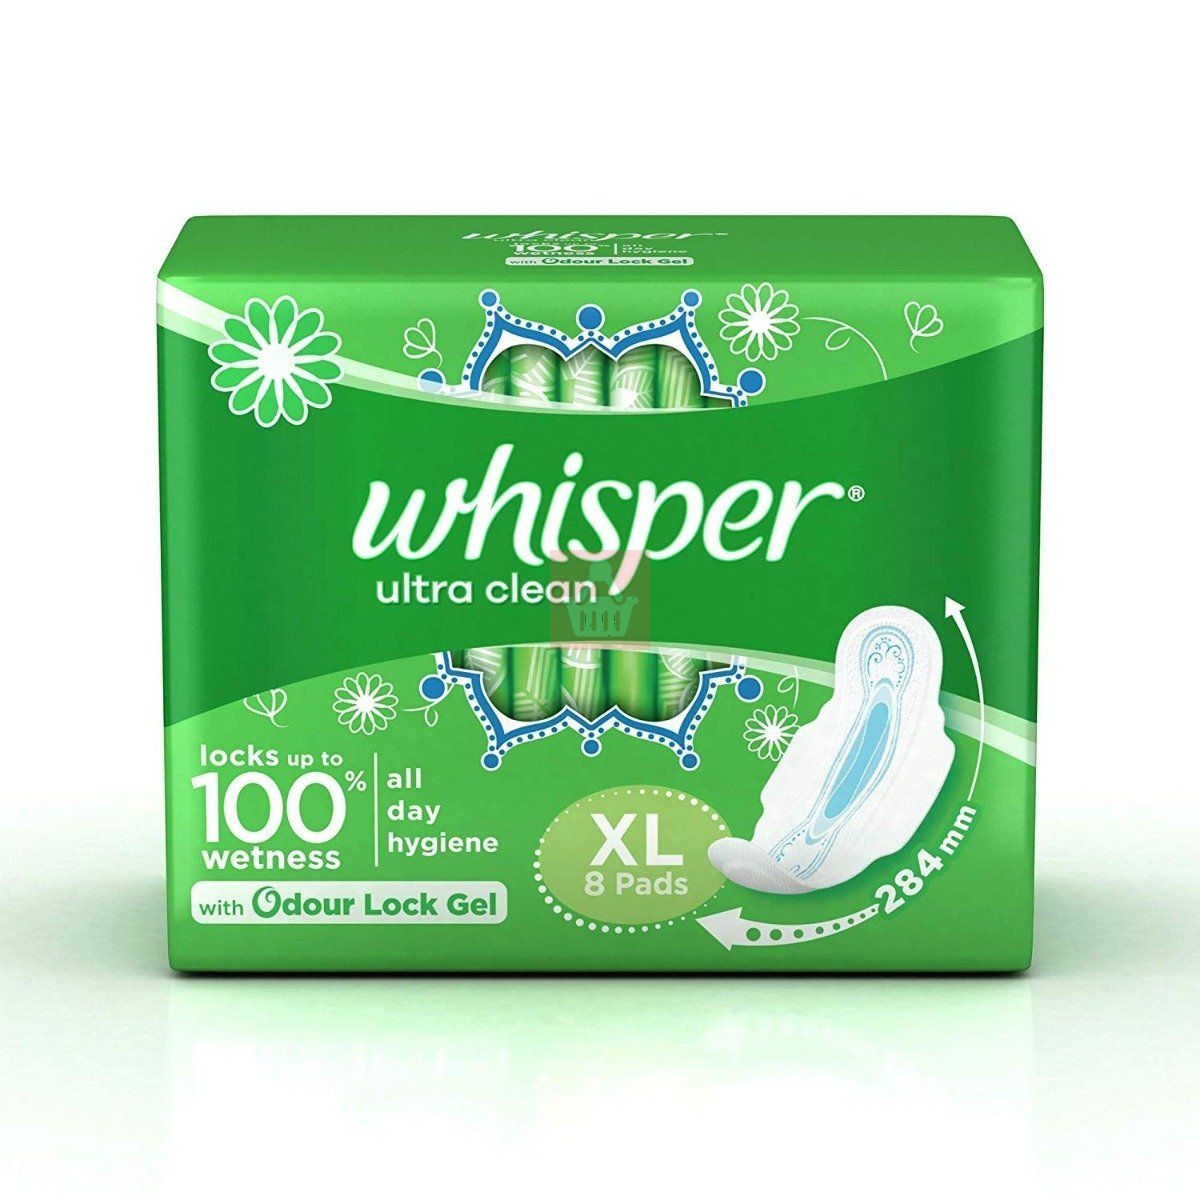 Whisper - Ultra Clean Sanitary Napkin XL (284mm) - 8 Pads